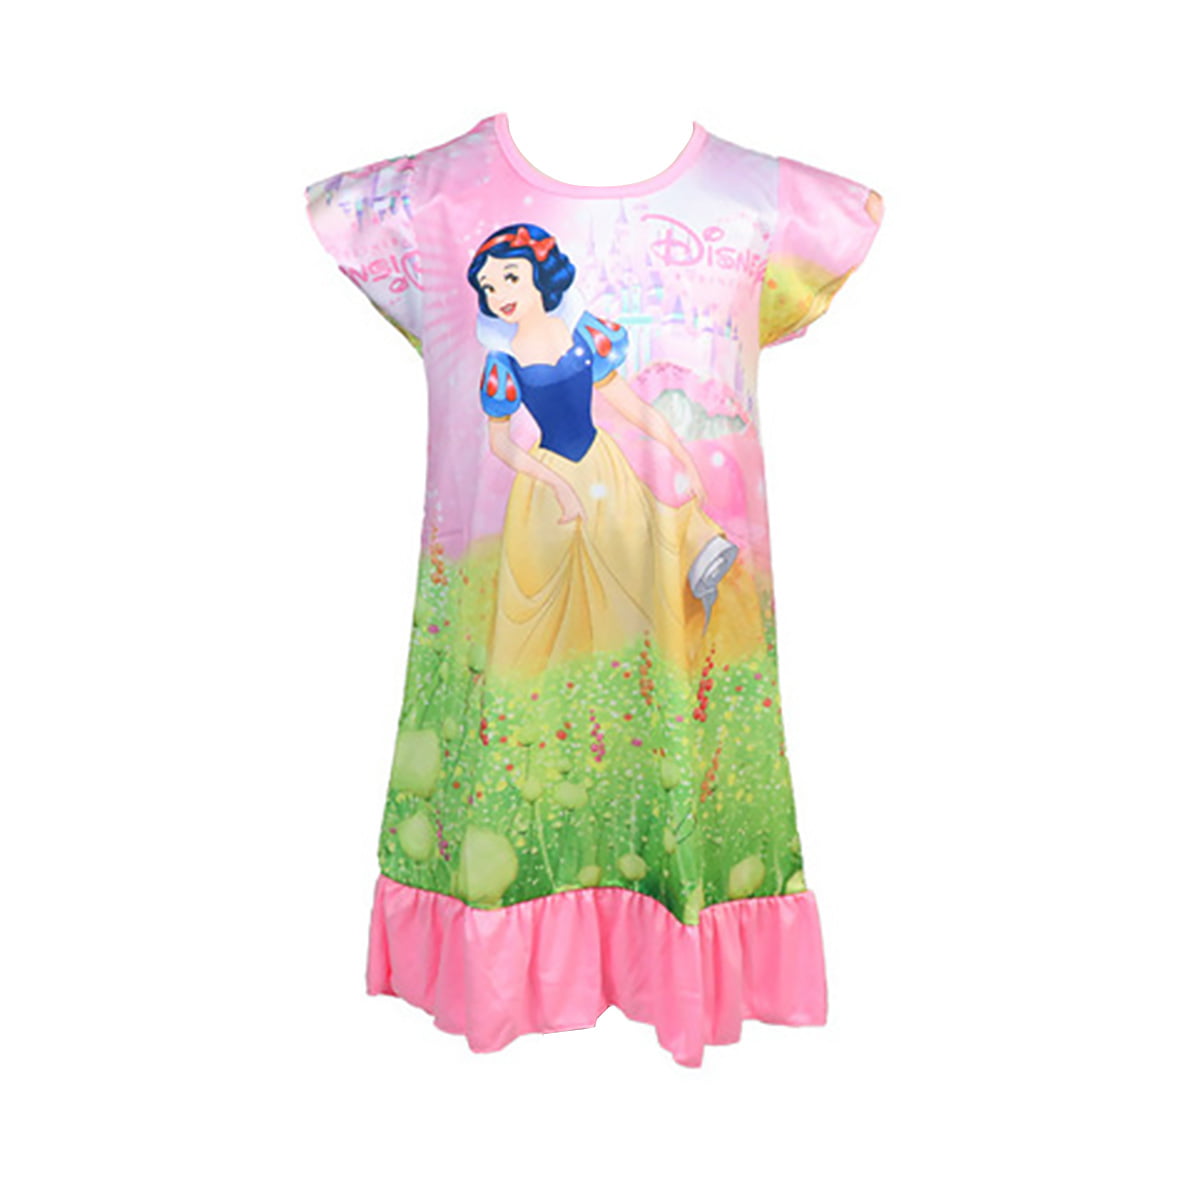 Details about    Girls Kids COCO Pajamas Nightgown Princess Dress O56 